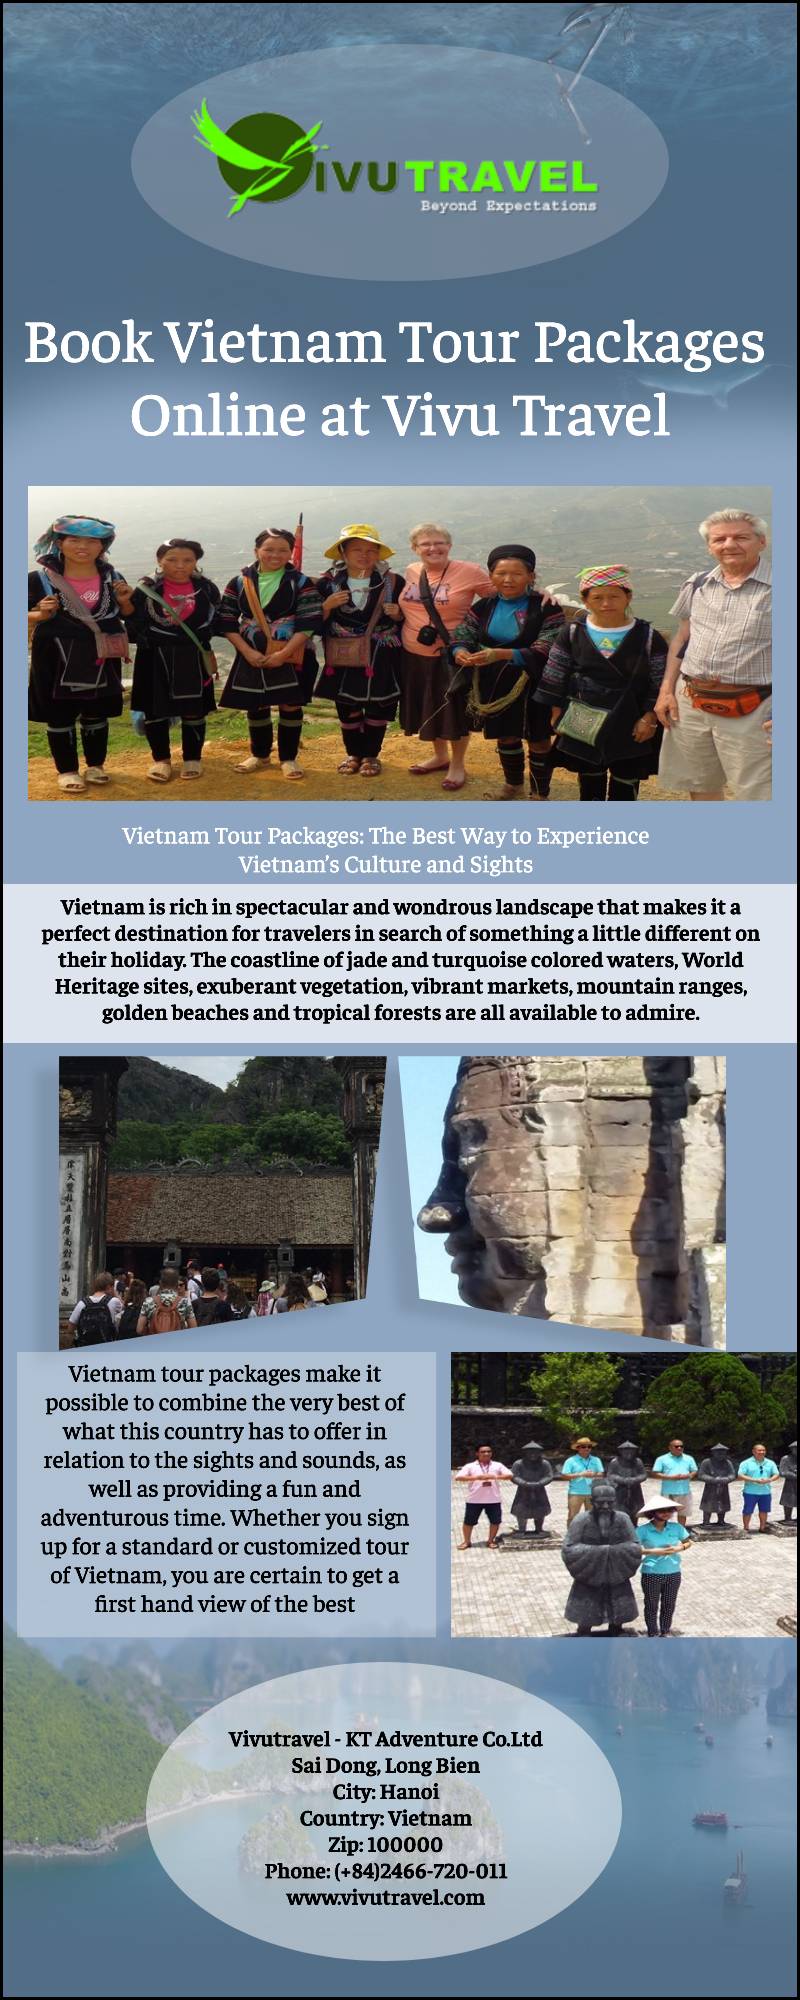 Book Vietnam Tour Packages Online at Vivu Travel.jpg  by vivutravel